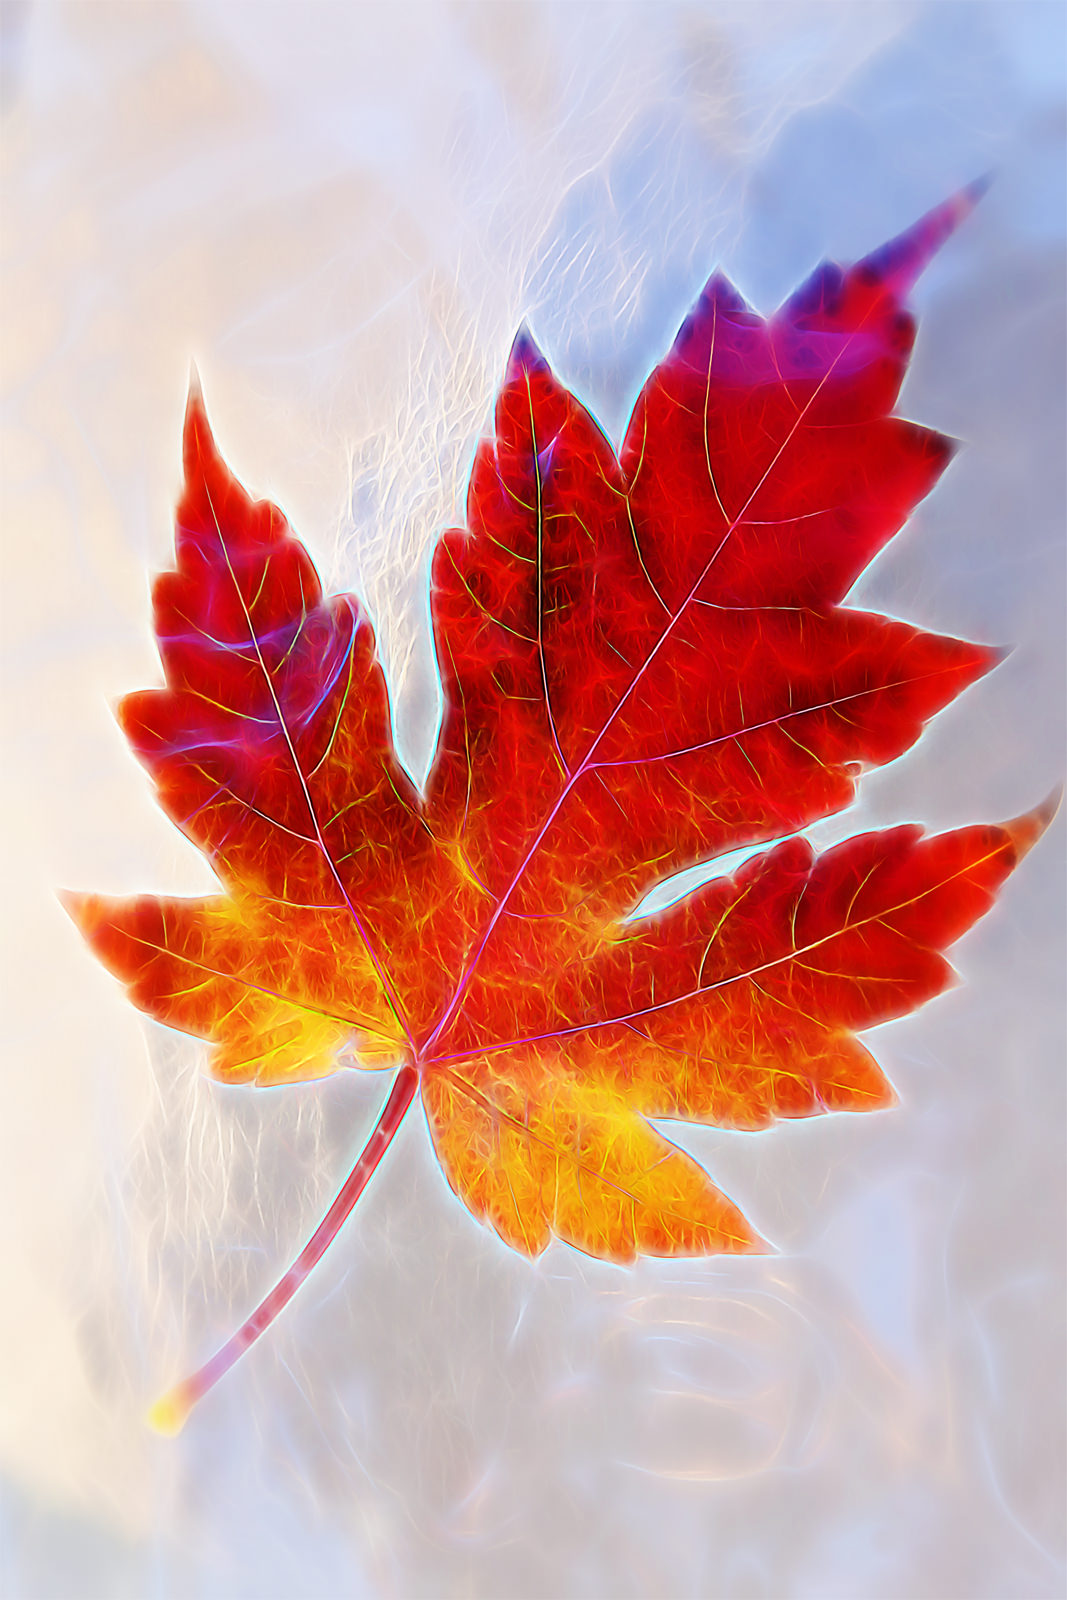 Red Maple Leaf on Ice